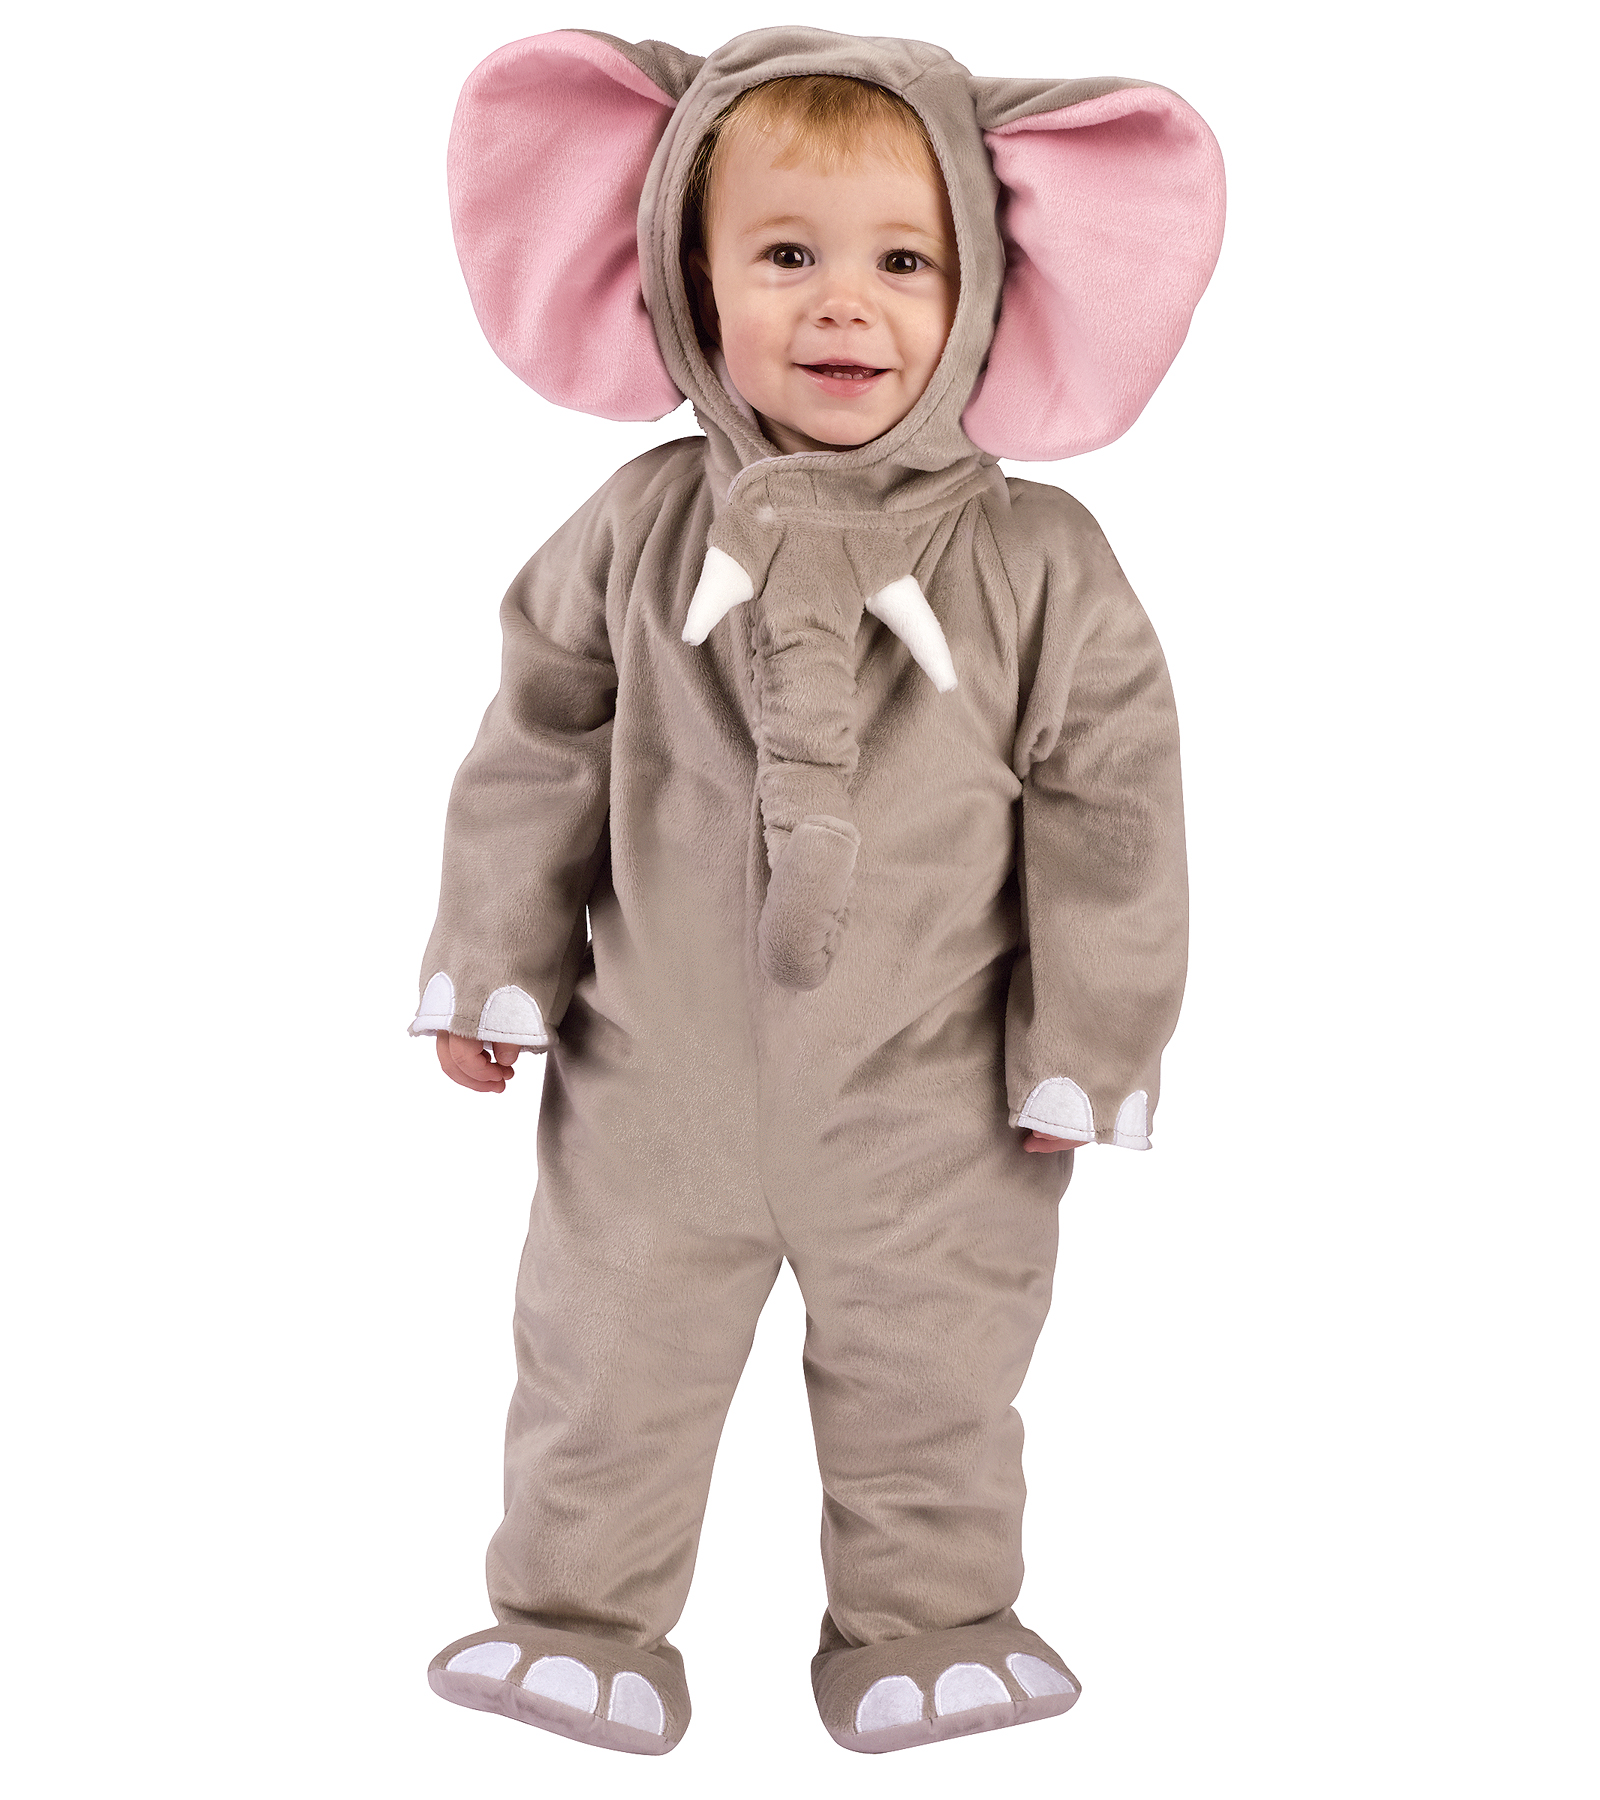 Infant/Toddler Cuddly Elephant Halloween Costume